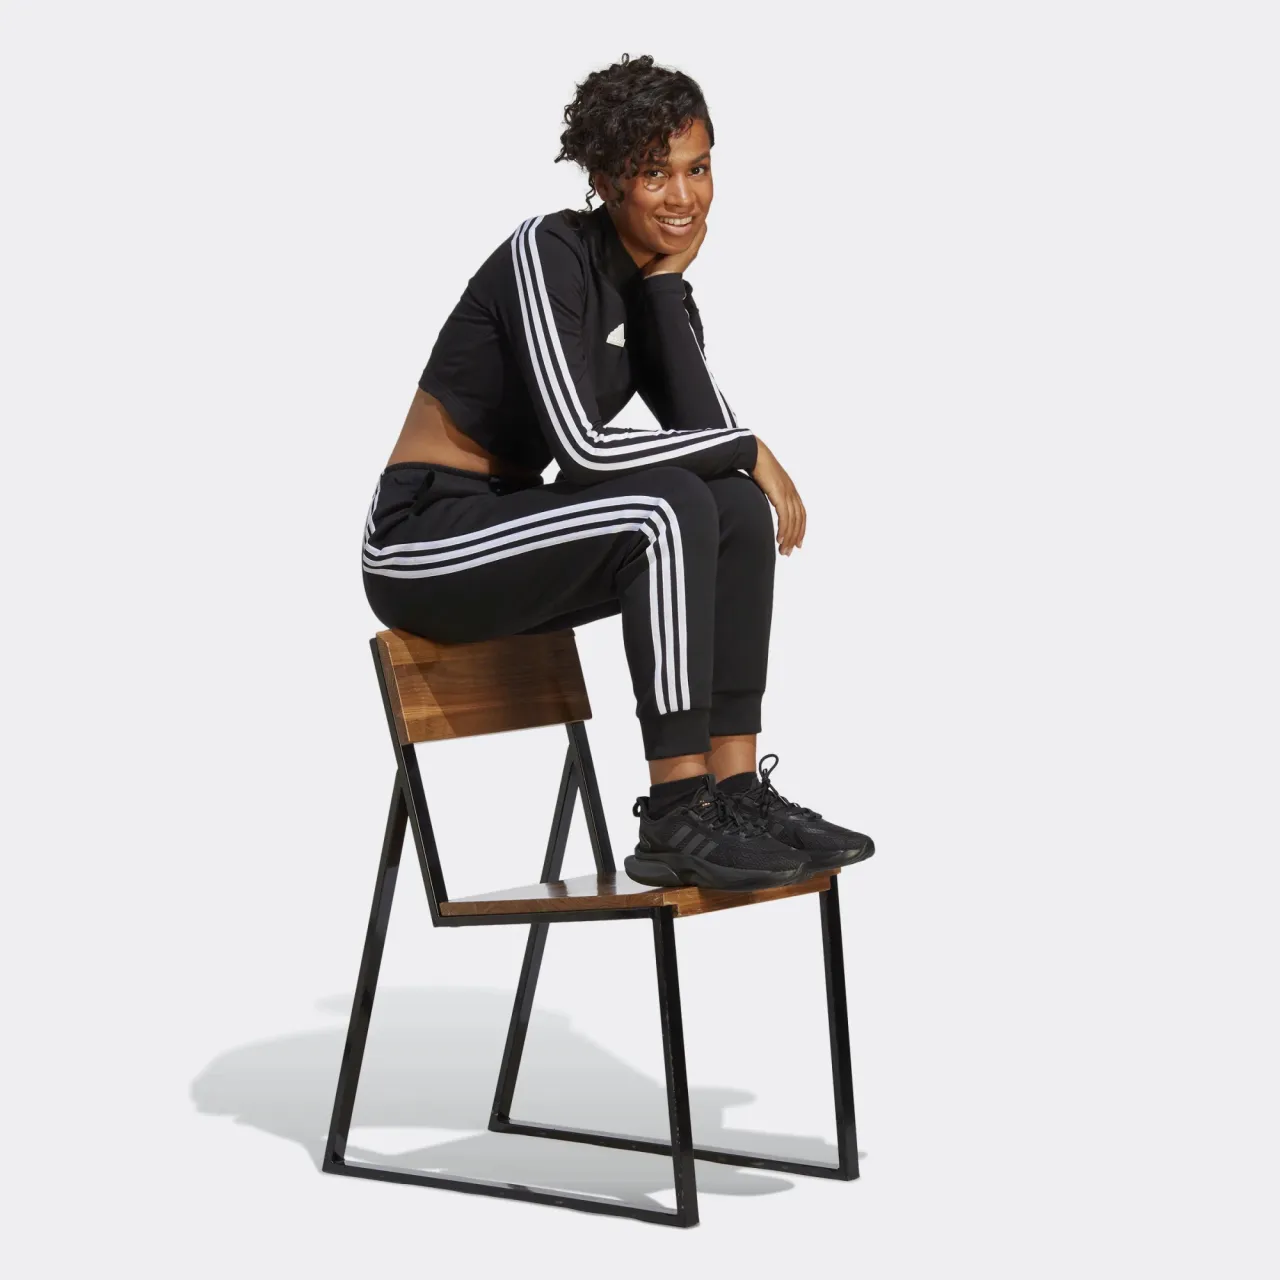 Adidas Future icons 3-stripes